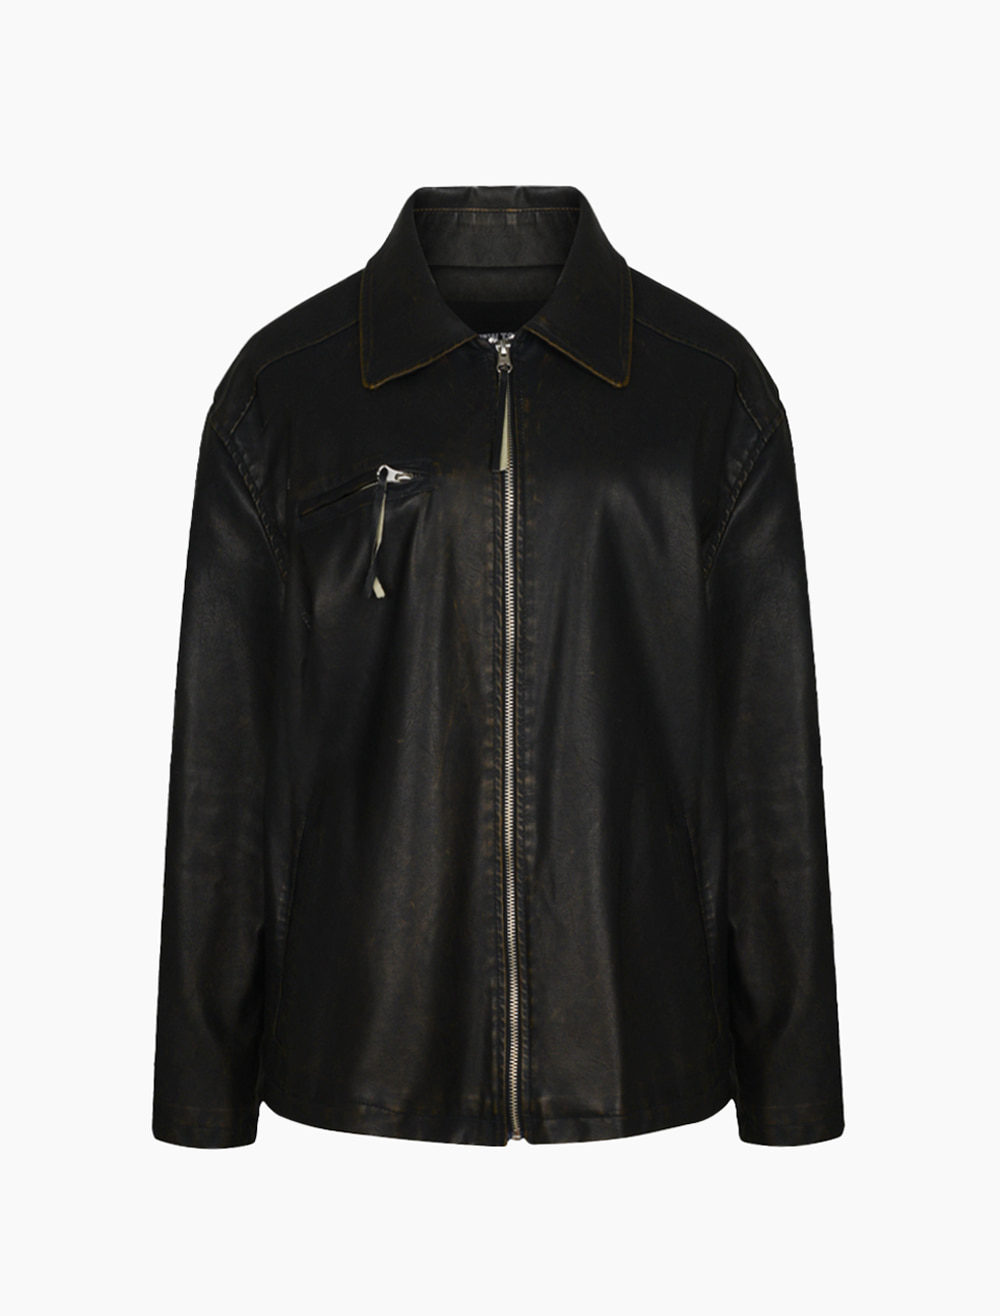 Western Leather Jacket (Brown)